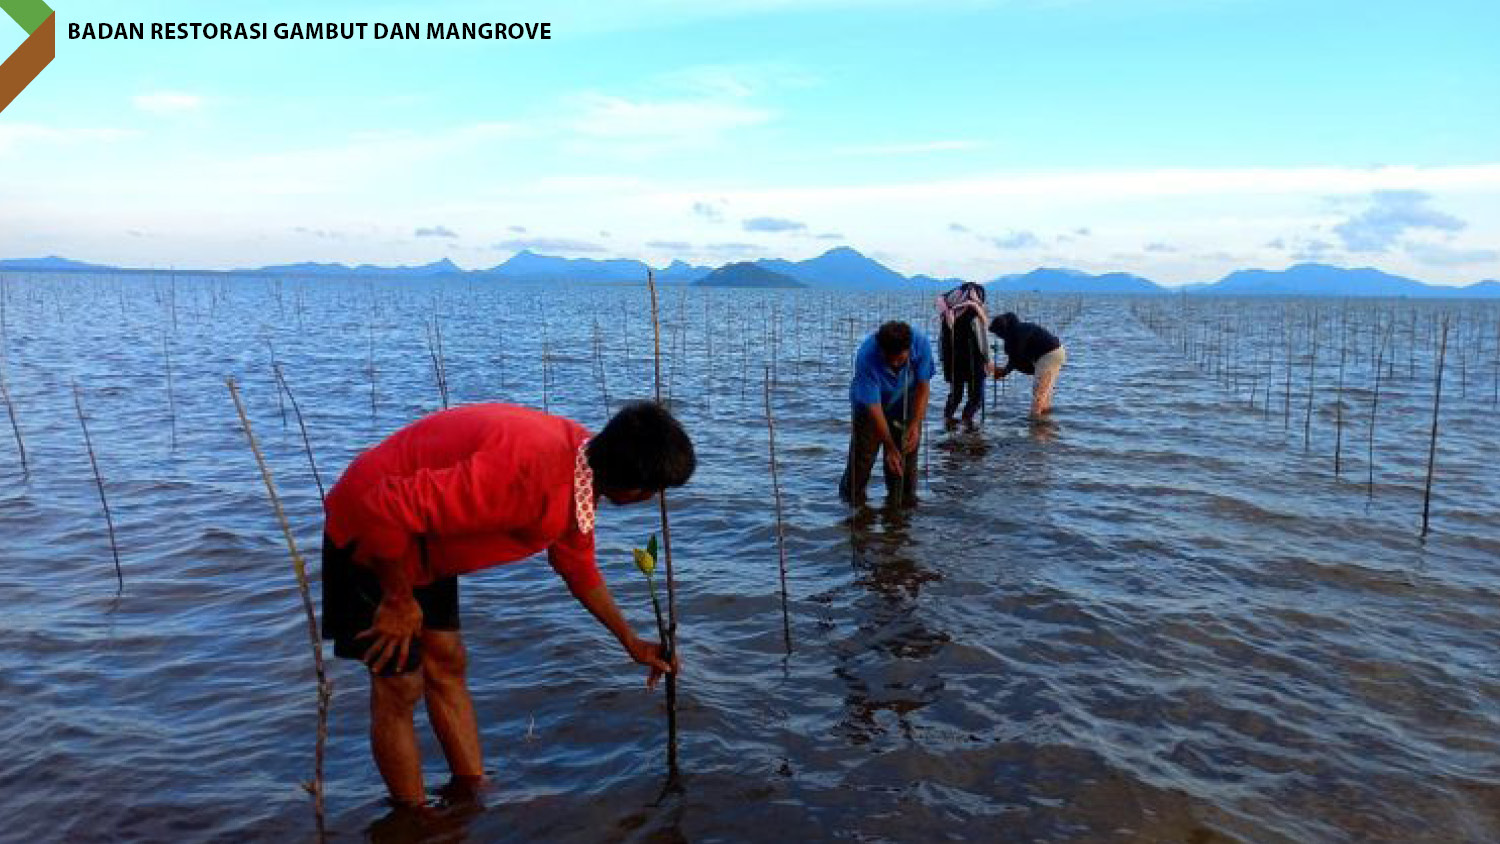 Salah satu upaya penanaman ajik atau bibit mangrove oleh Badan Restorasi Gambut dan Mangrove (BRGM).